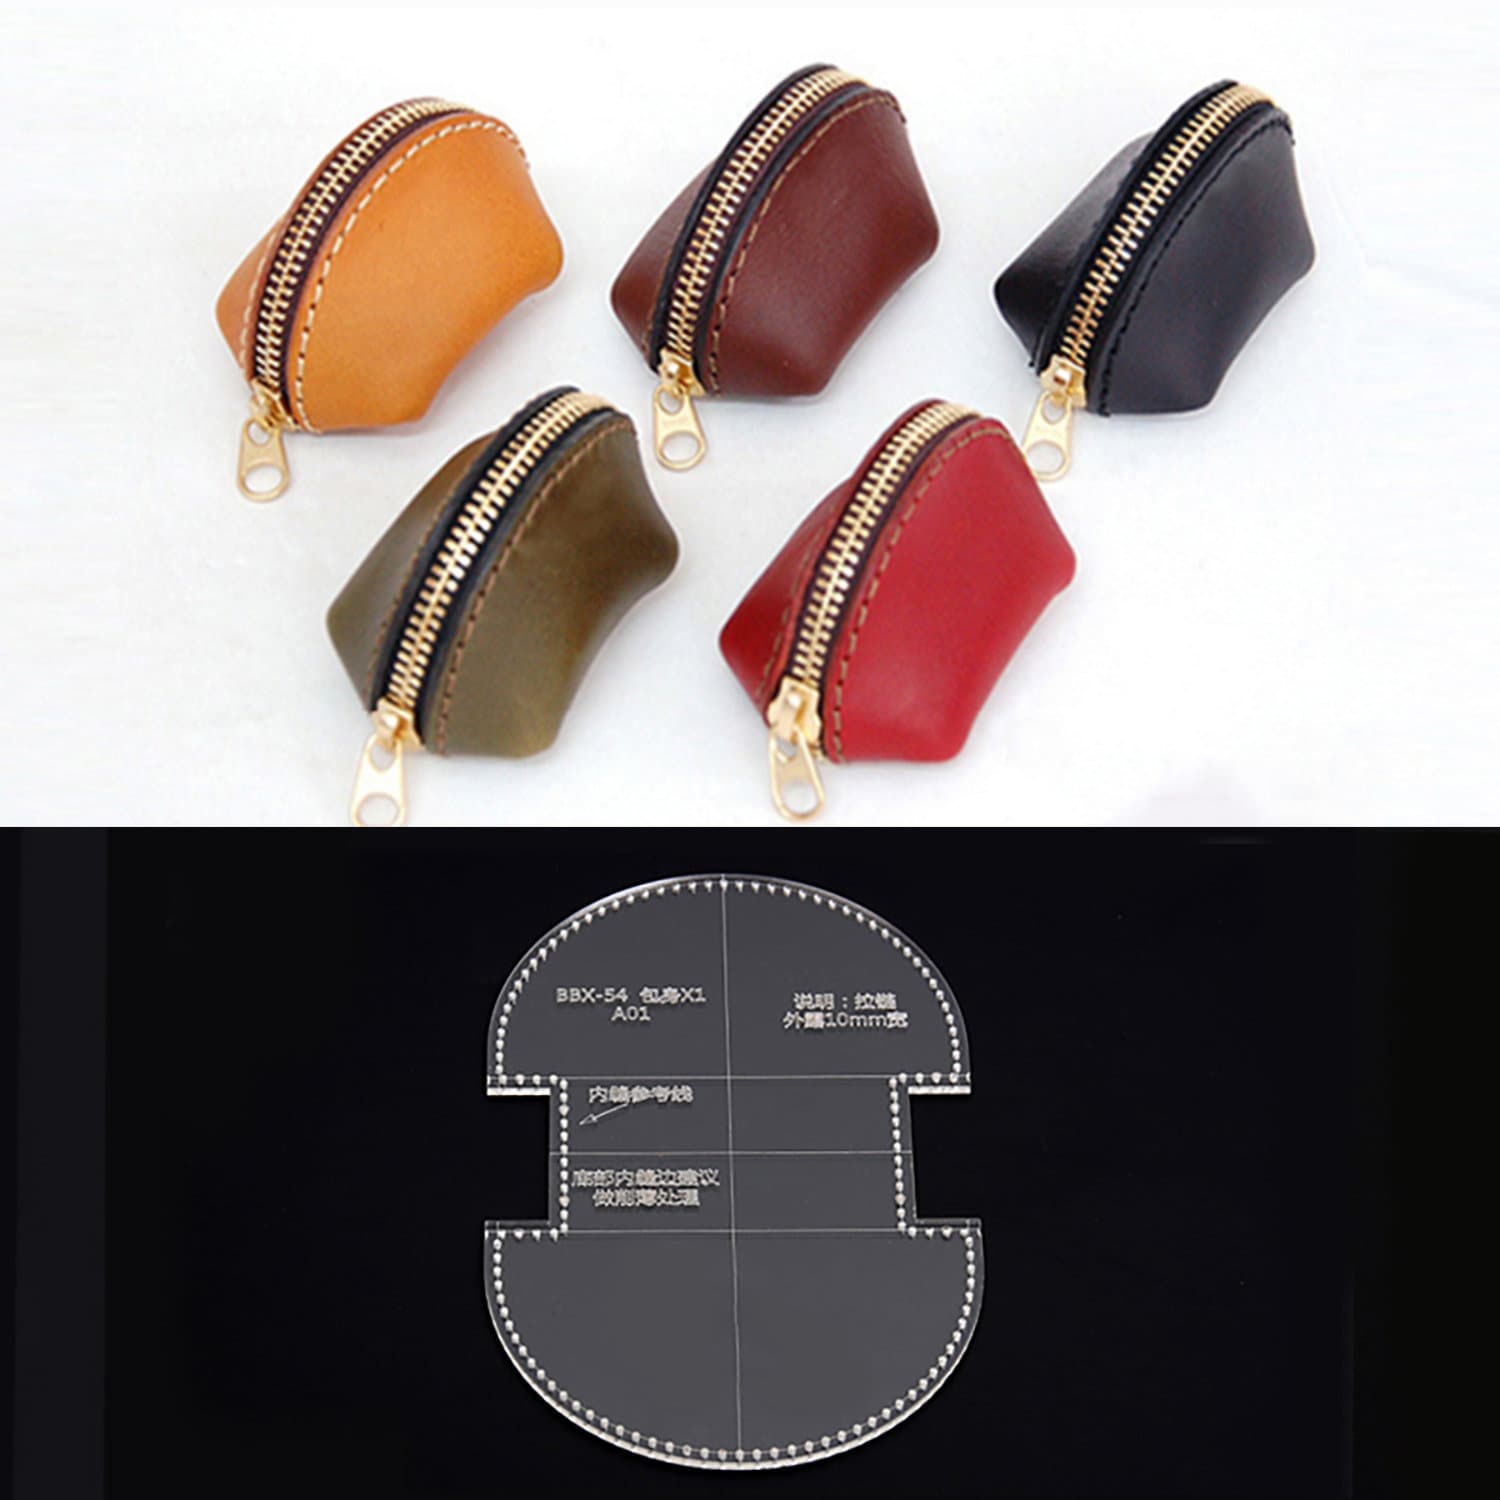 Tiny coin purses : r/Leathercraft